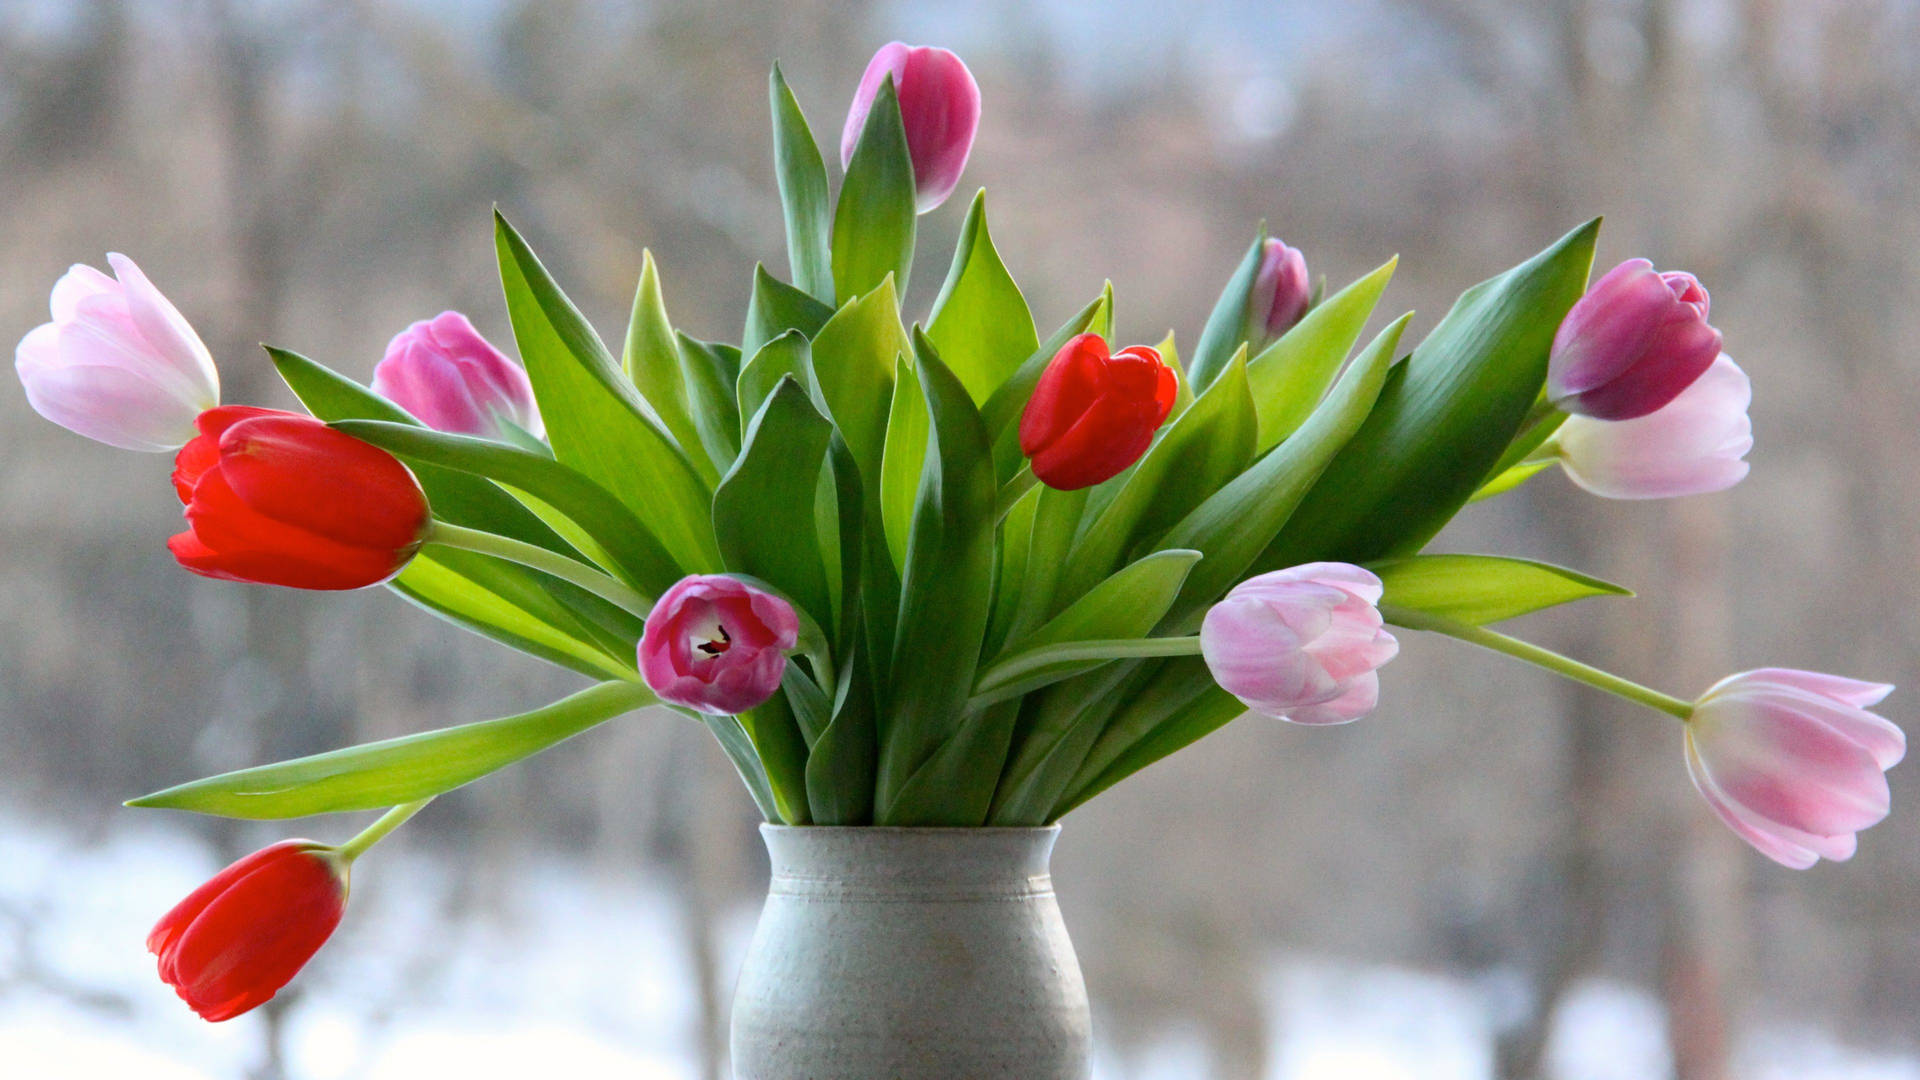 Caption: Elegant Drooping Tulips in a Flower Vase Wallpaper